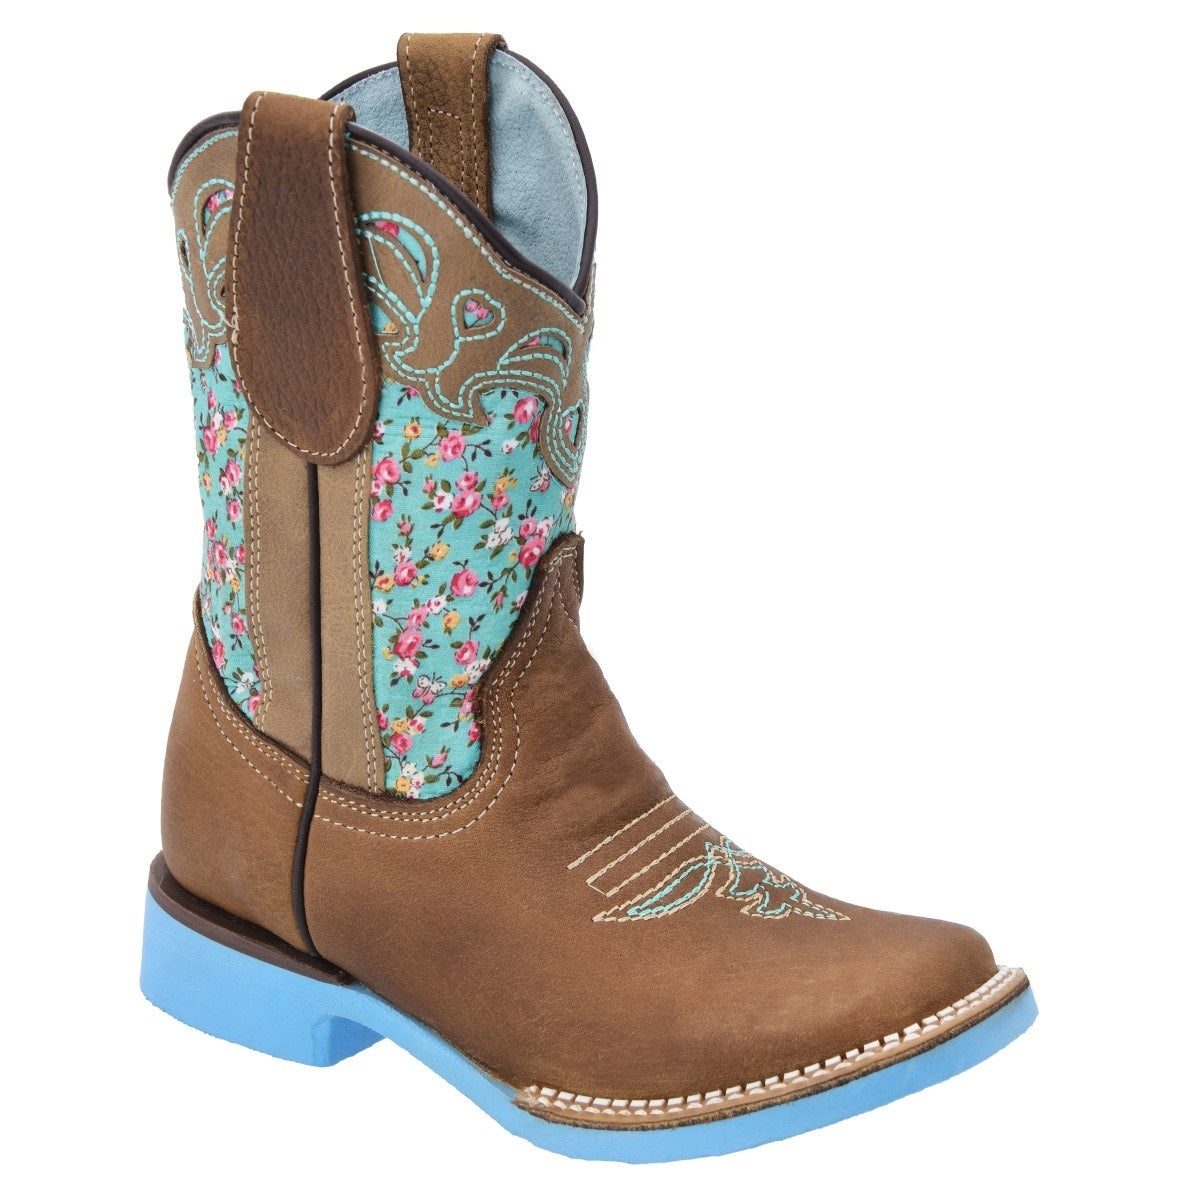 Botas vaqueras para ninas TM-WD0399 - Girls Western Boots